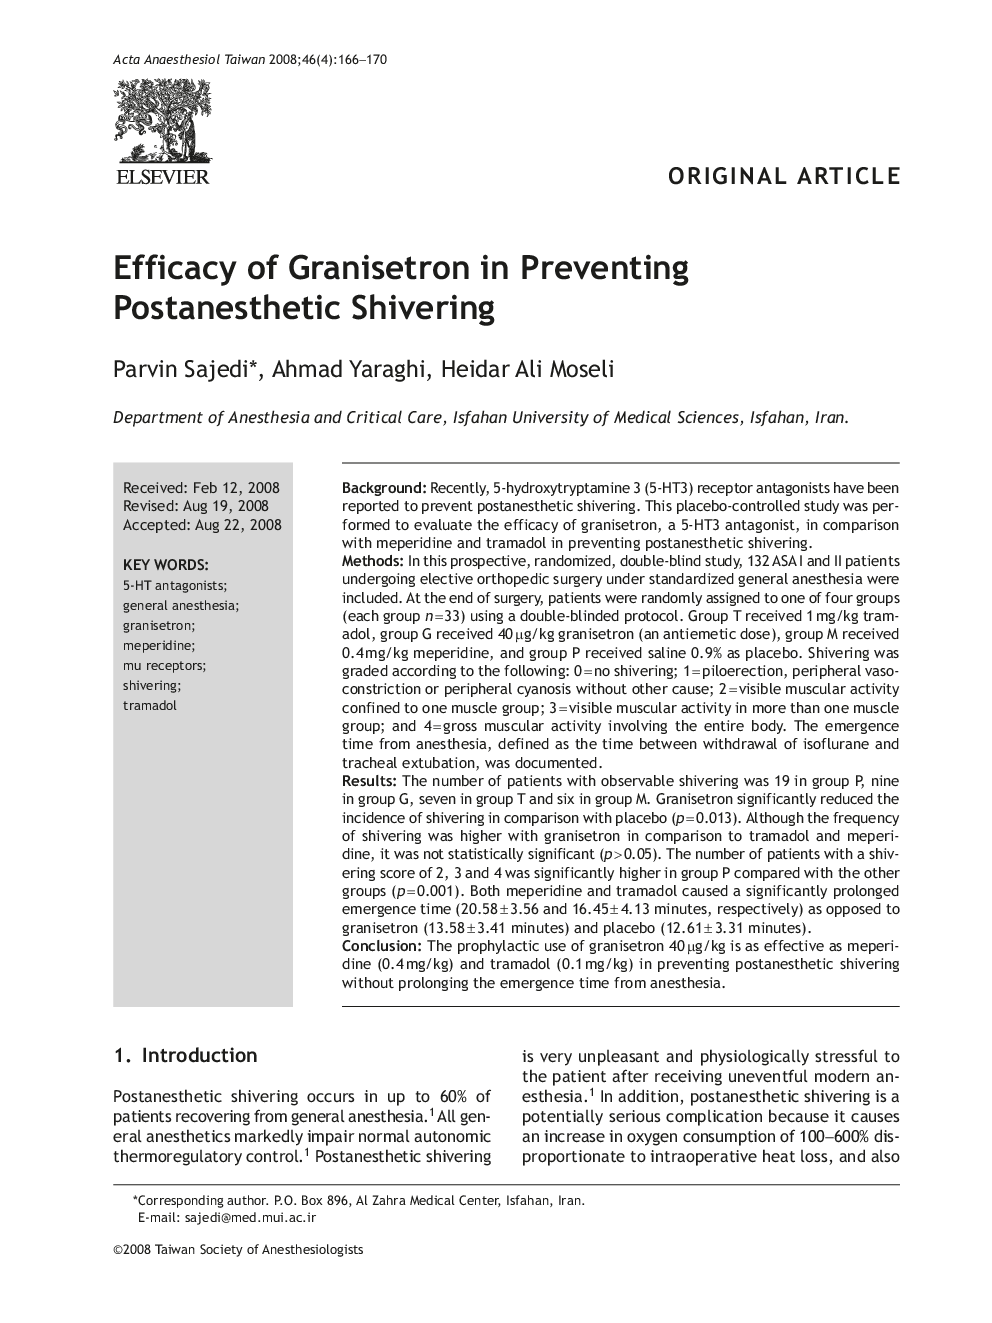 Efficacy of Granisetron in Preventing Postanesthetic Shivering